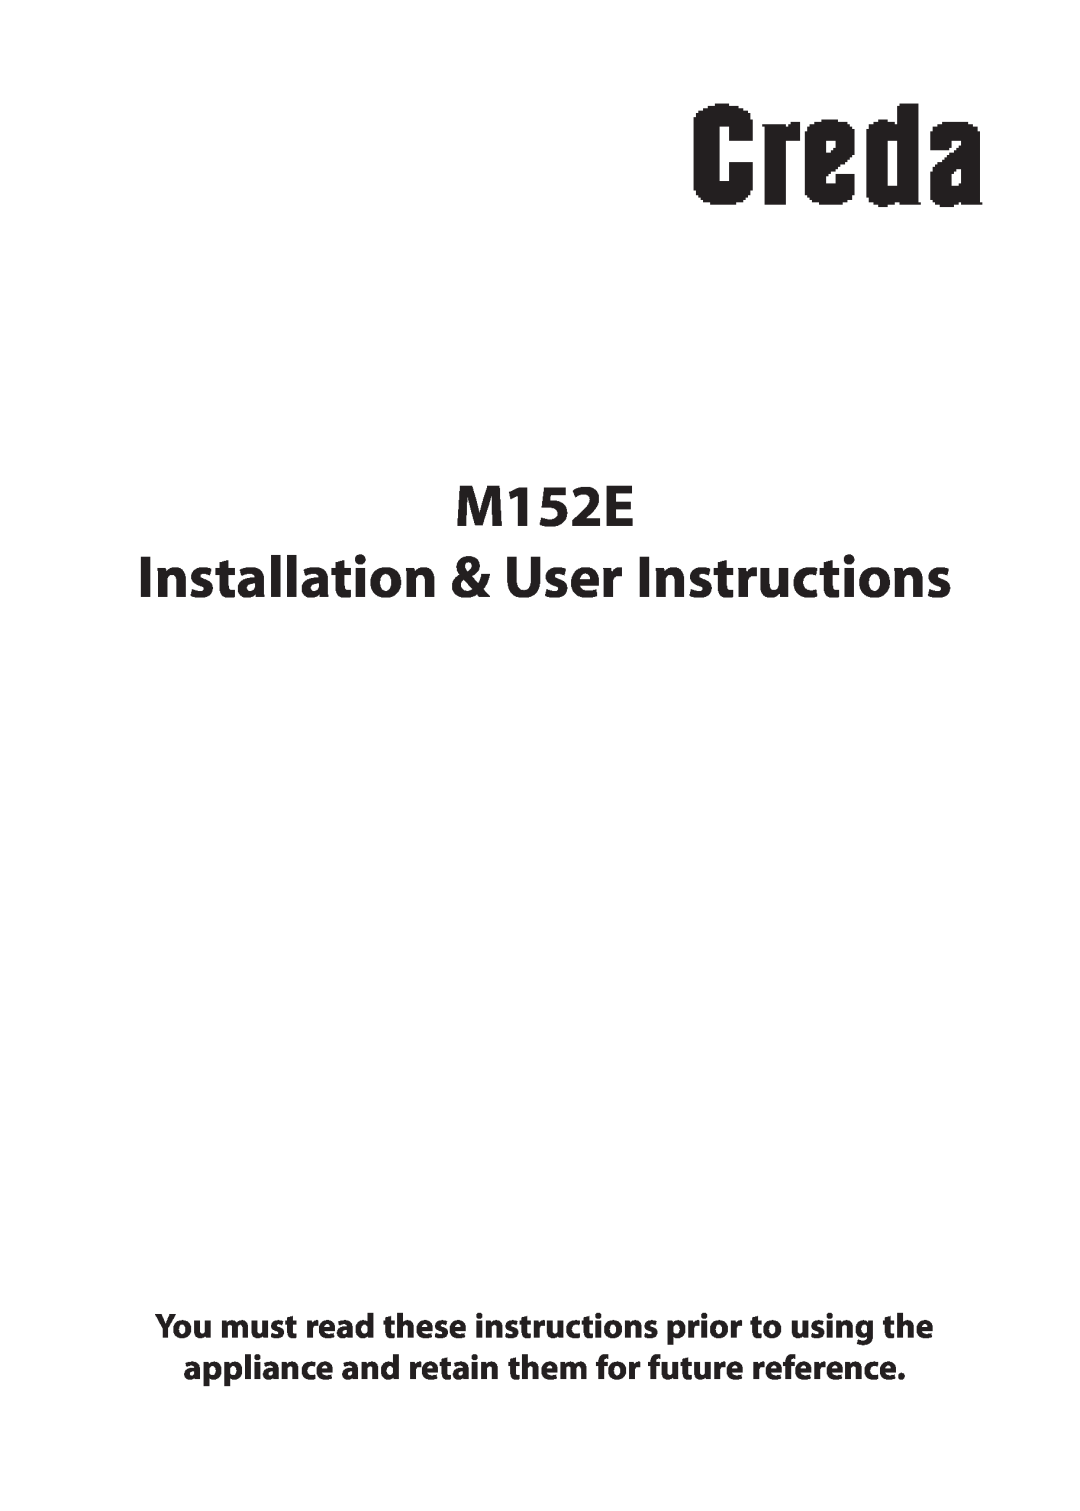 Creda manual M152E Installation & User Instructions 